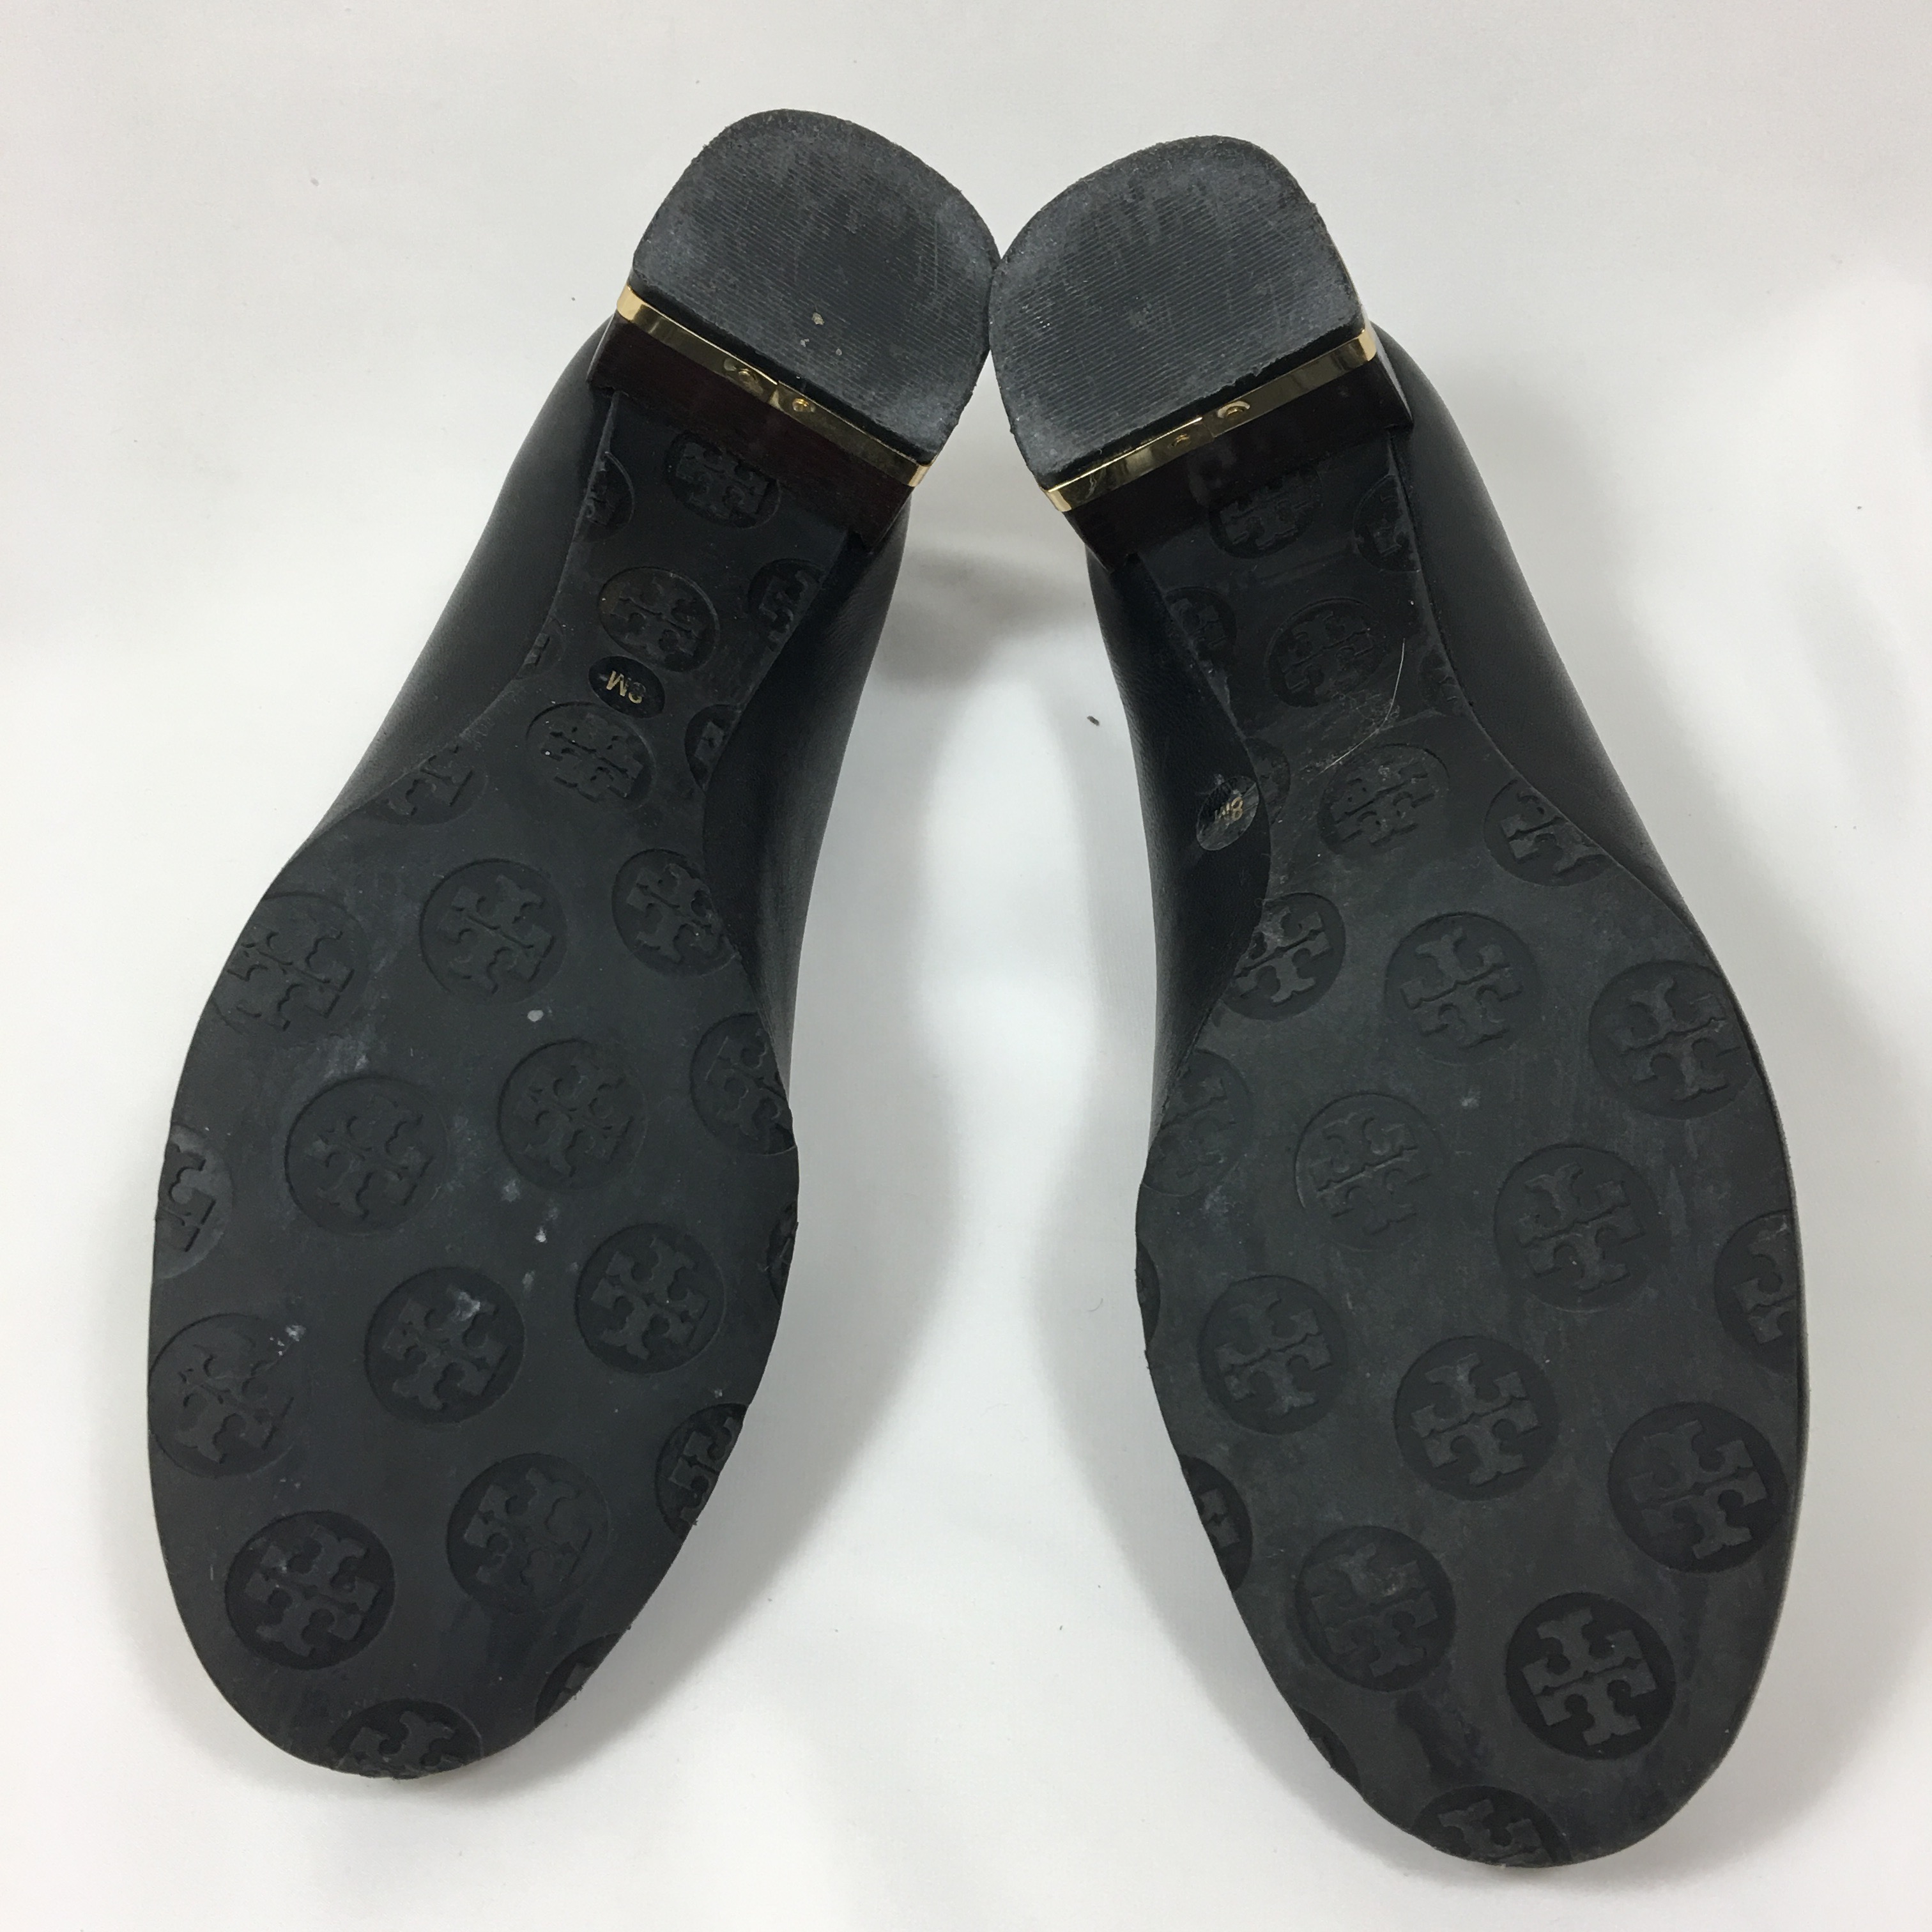 Tory-Burch-black-pumps-rubber-soles - Still in fashion